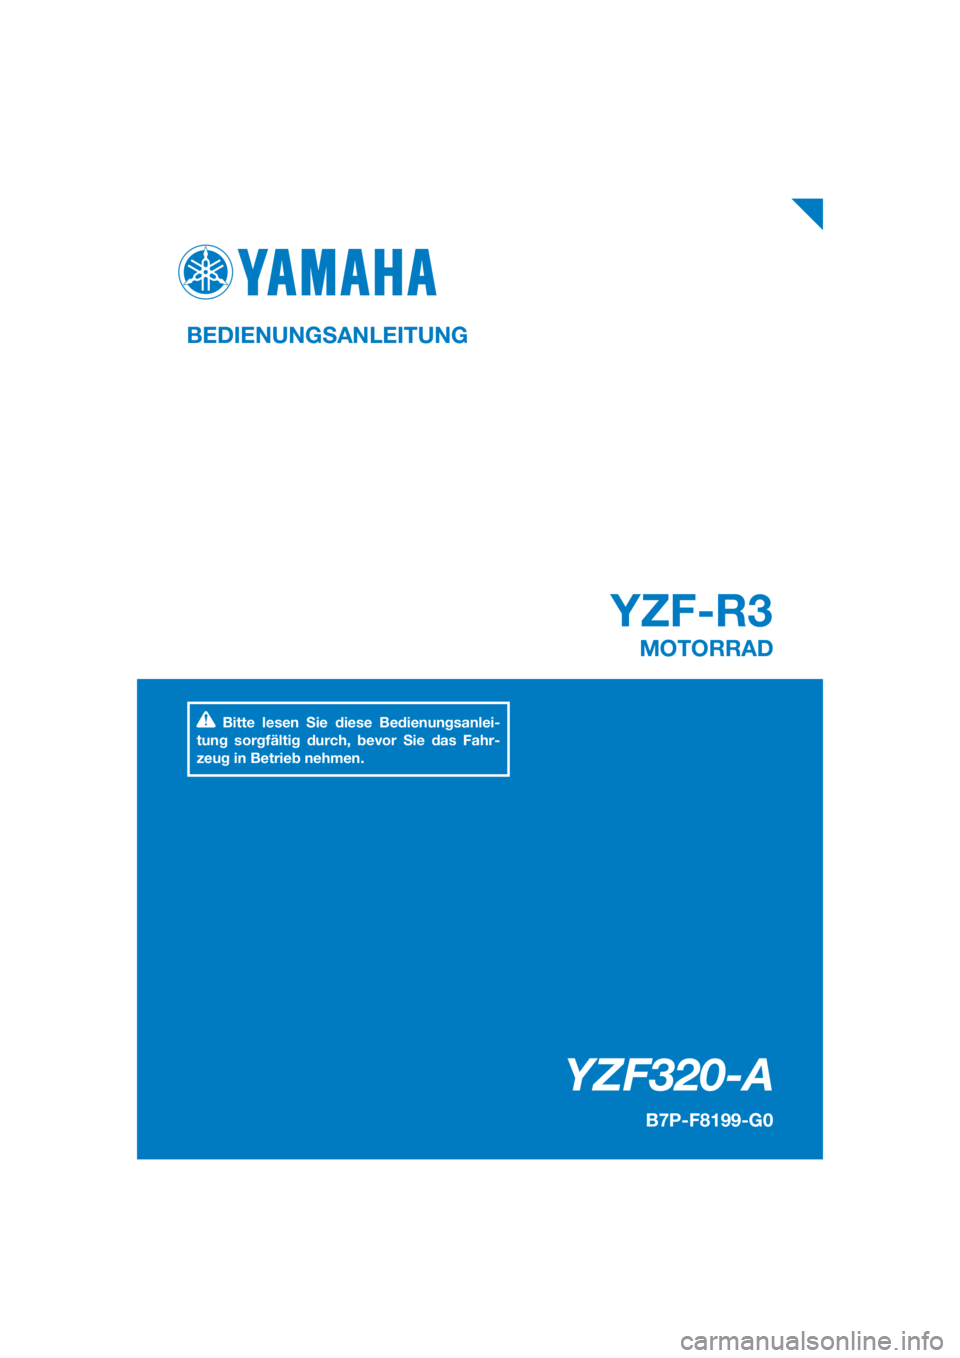 YAMAHA YZF-R3 2019  Owners Manual DIC183
YZF320-A
YZF-R3
BEDIENUNGSANLEITUNG
B7P-F8199-G0
MOTORRAD
Bitte lesen Sie diese Bedienungsanlei-
tung sorgfältig durch, bevor Sie das Fahr-
zeug in Betrieb nehmen.
[German  (G)] 